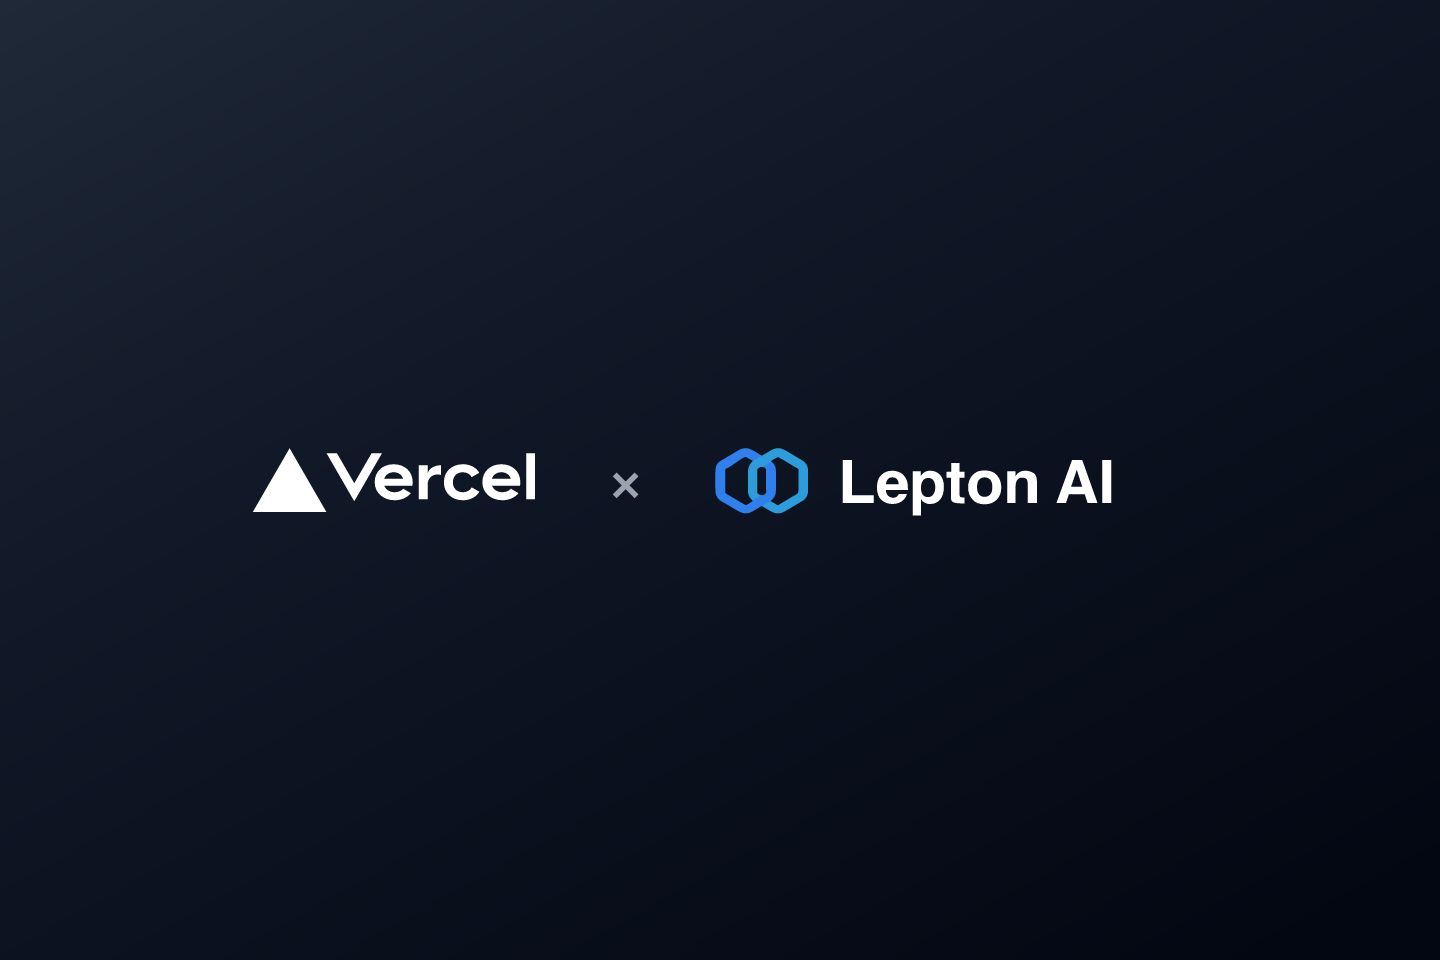 Vercel with Lepton